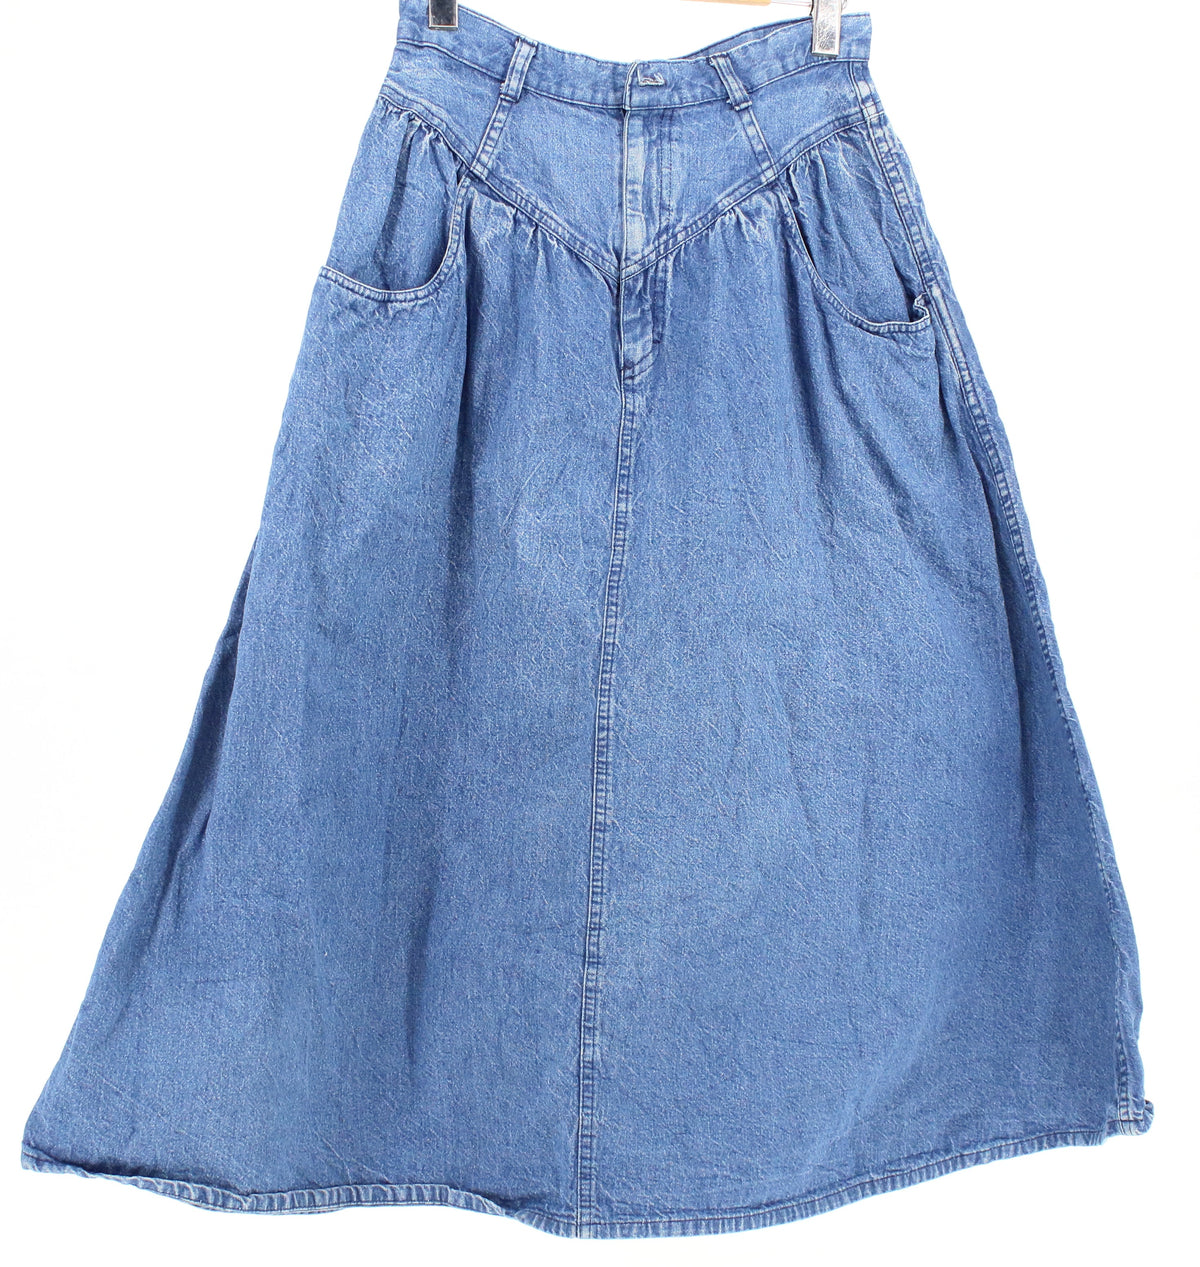 Transaction Blue Denim Front Pocket Skirt